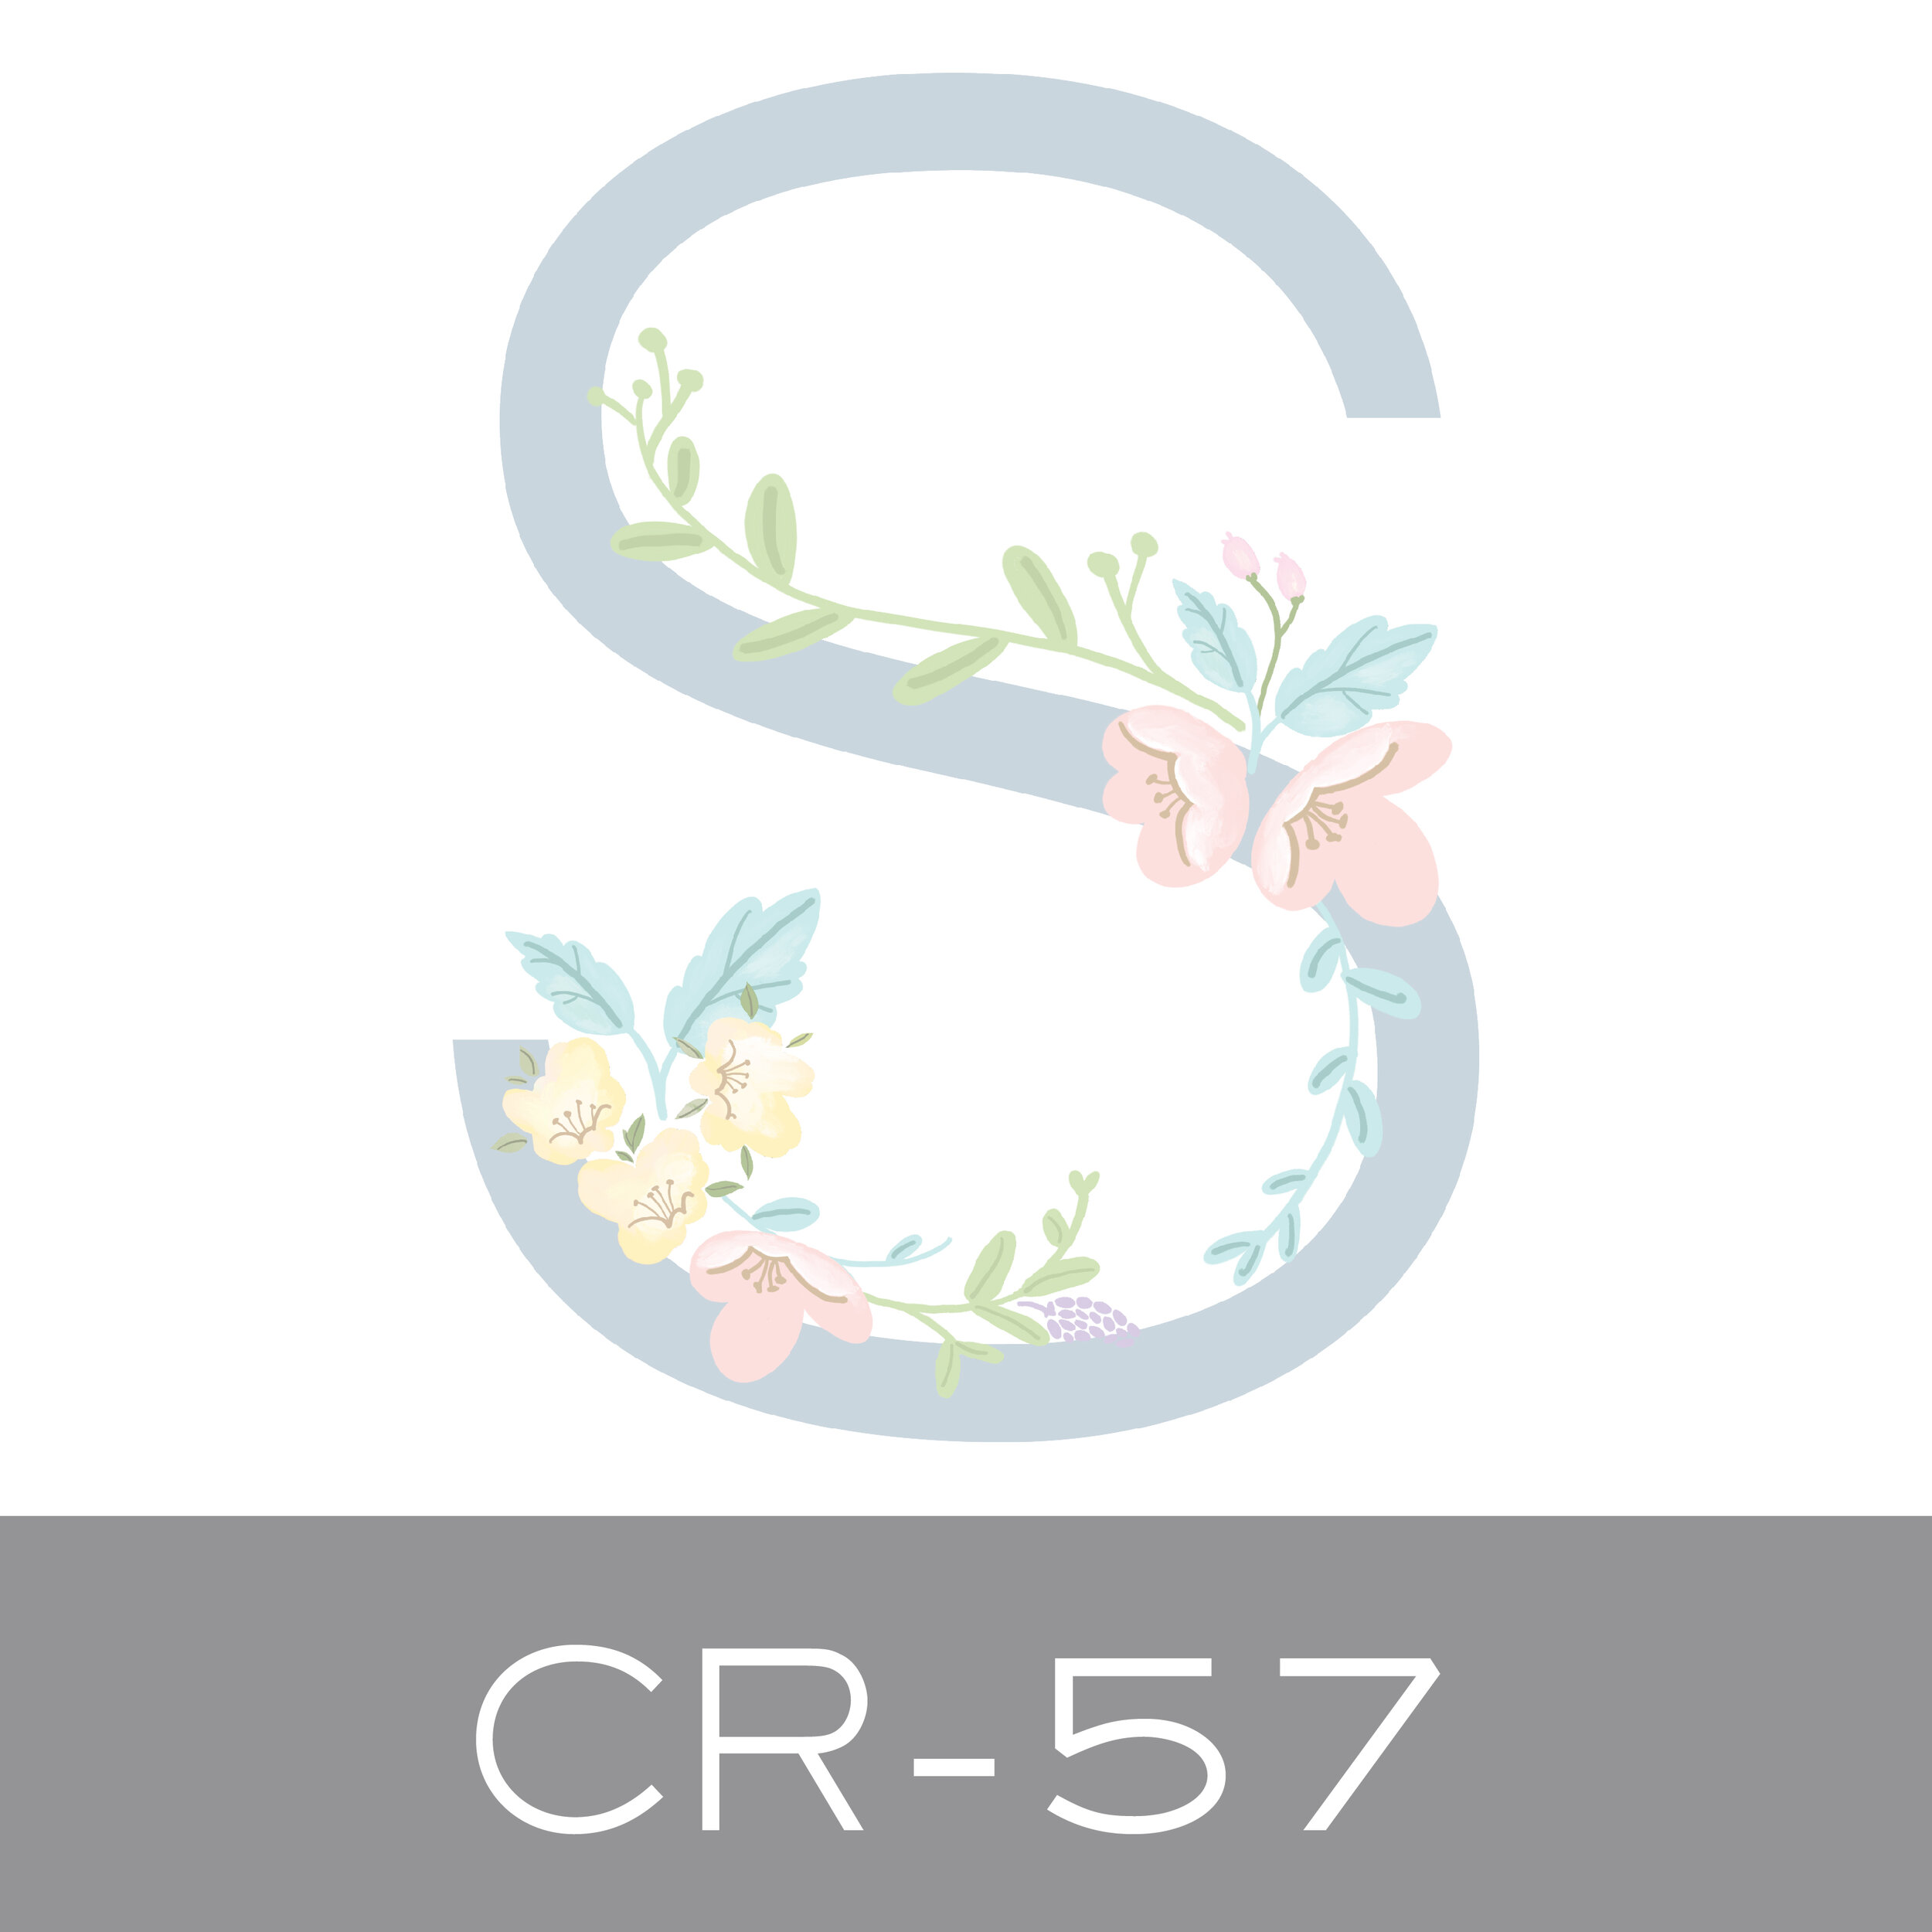 CR-57.jpg